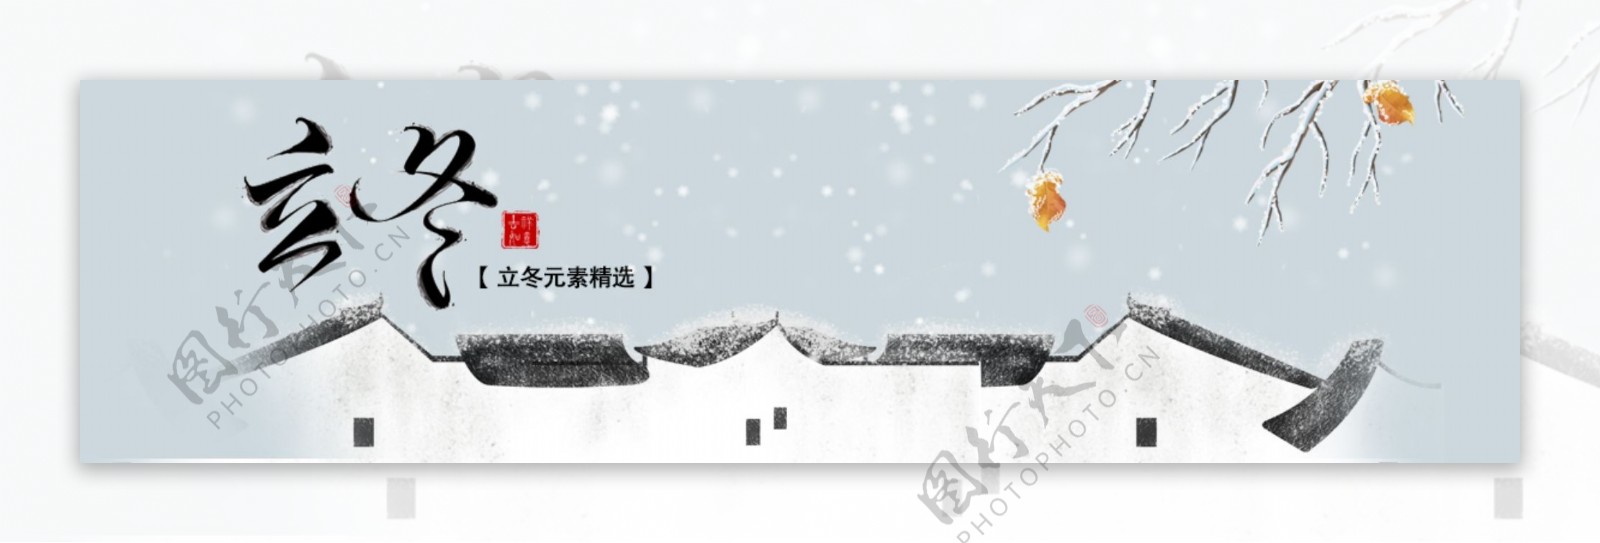 立冬宣传banner雪树房子